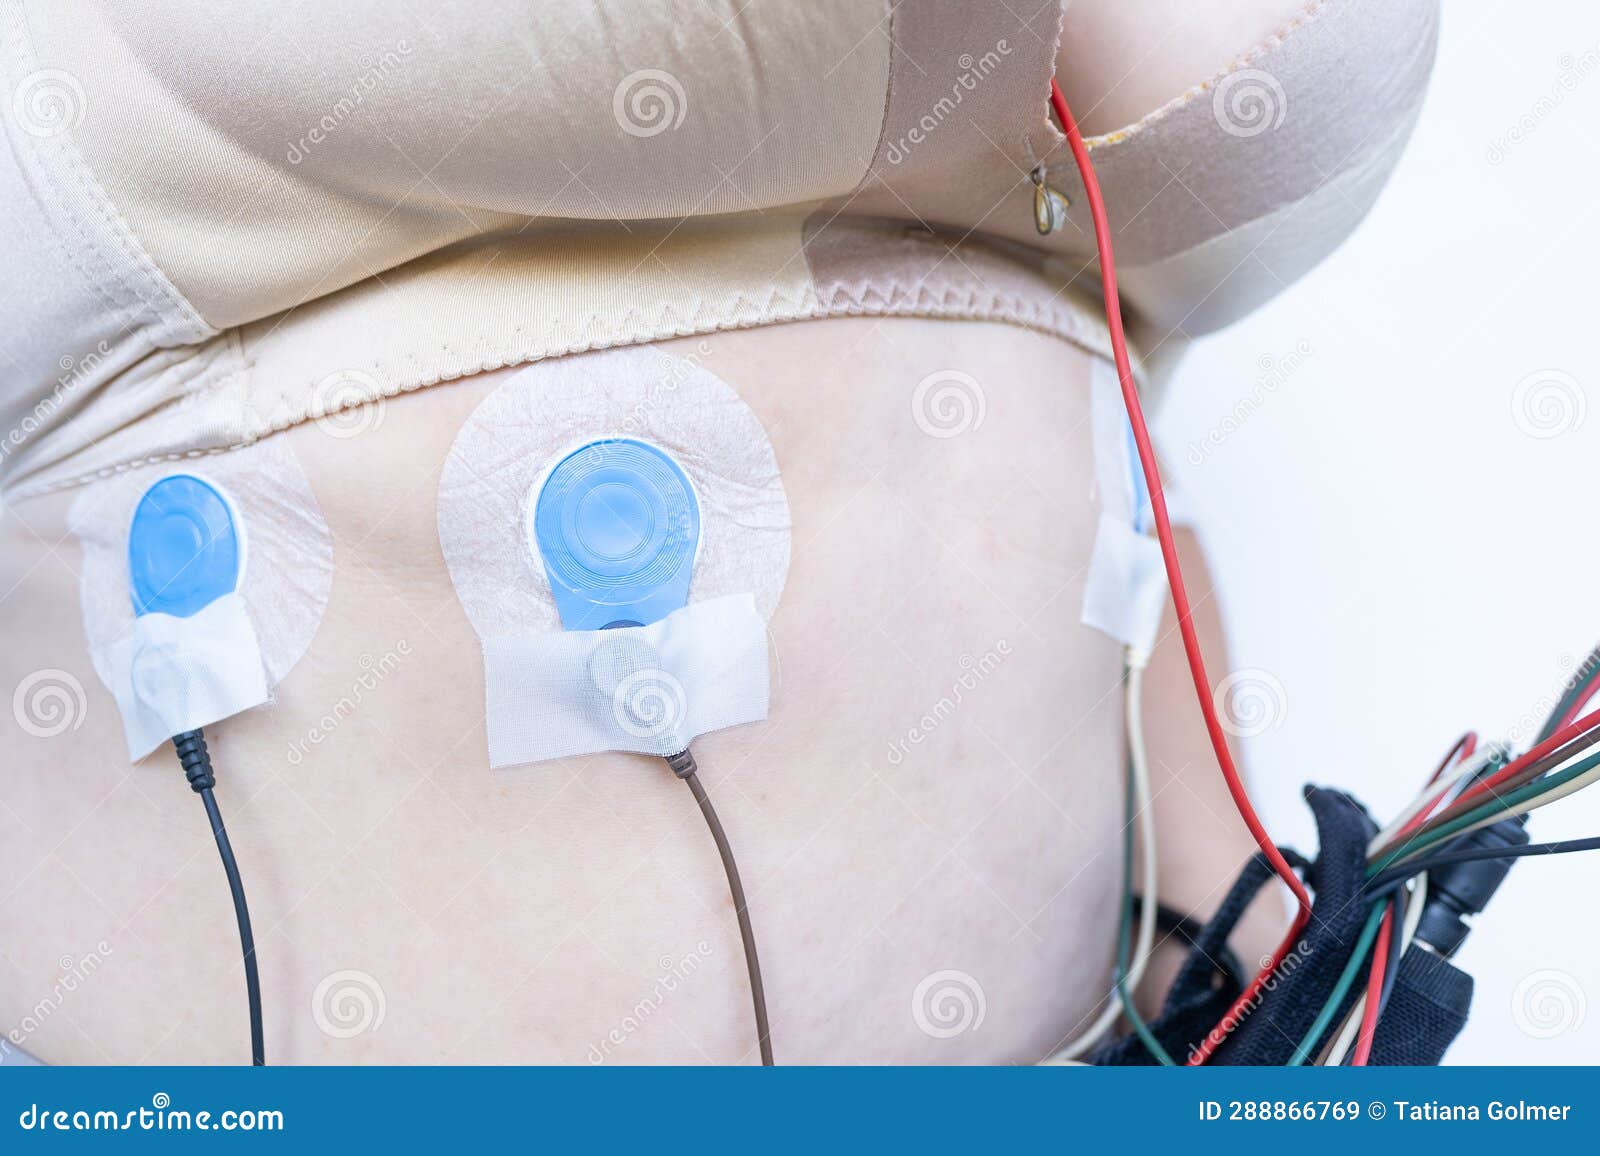 https://thumbs.dreamstime.com/z/sensors-body-holter-monitoring-woman-holter-monitor-monitoring-electrocardiogram-blood-pressure-cardiac-288866769.jpg